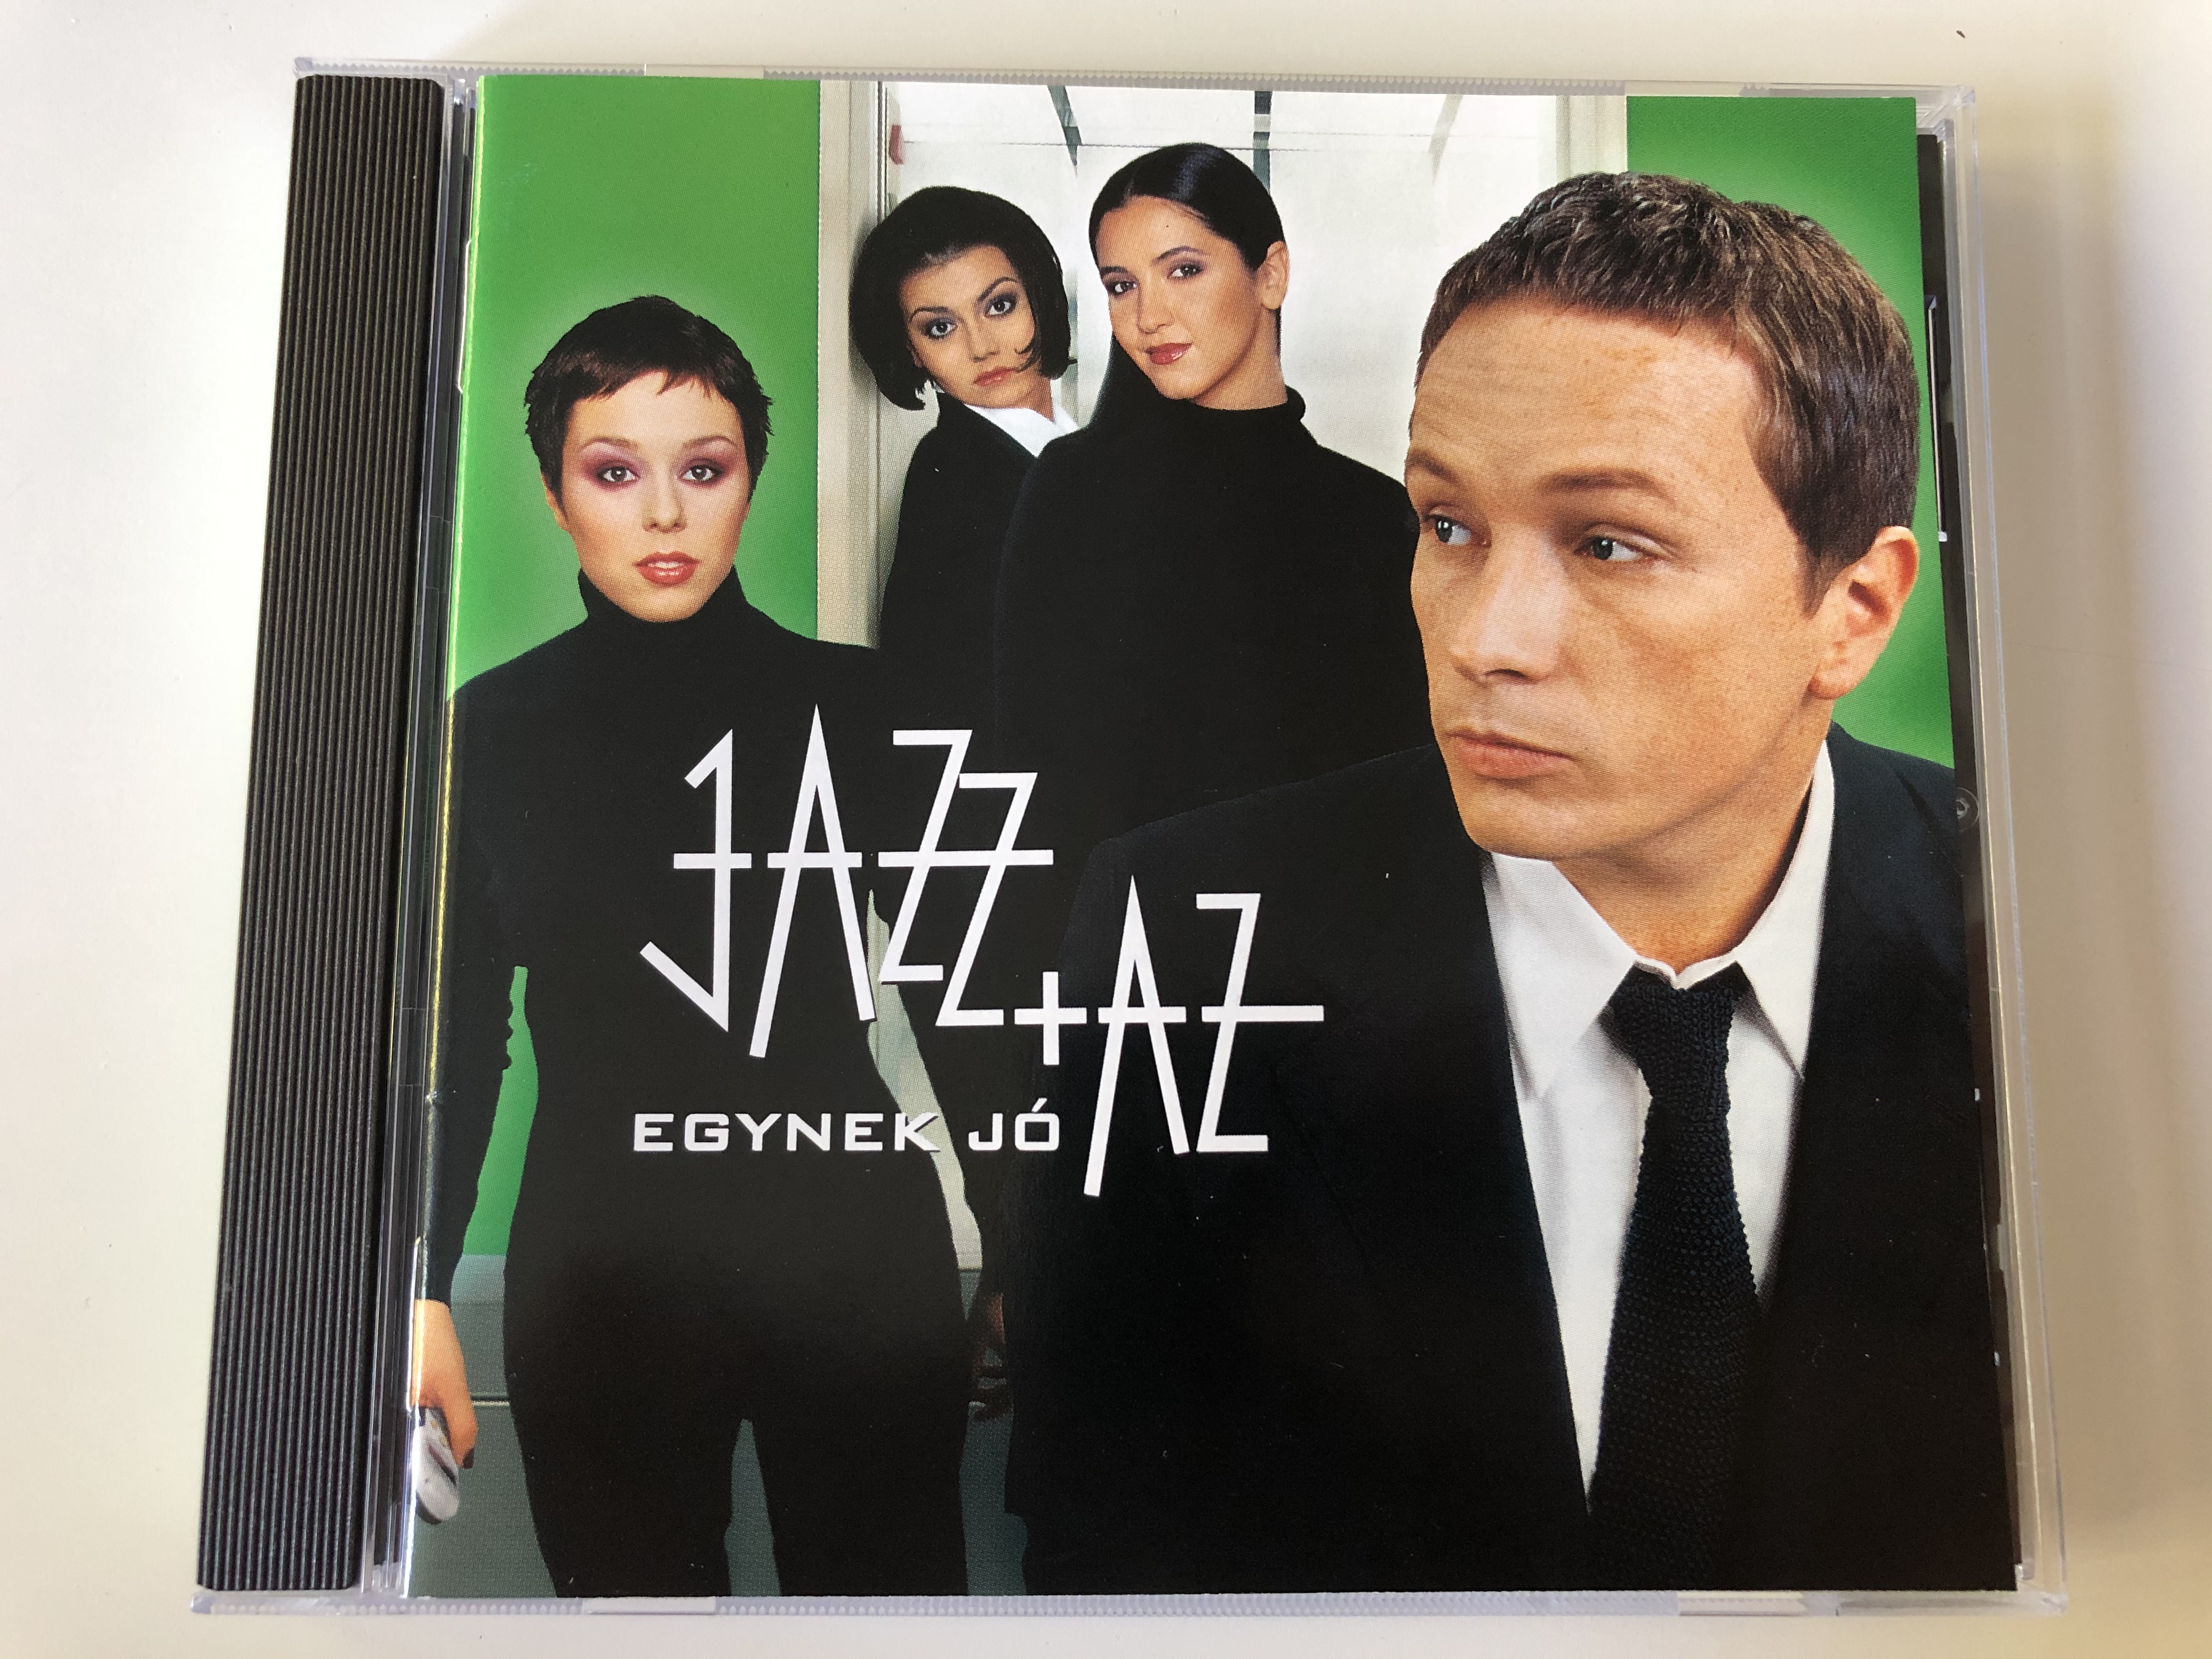 jazz-az-egynek-j-budapest-music-center-records-audio-cd-1999-bmc-cd-032-1-.jpg